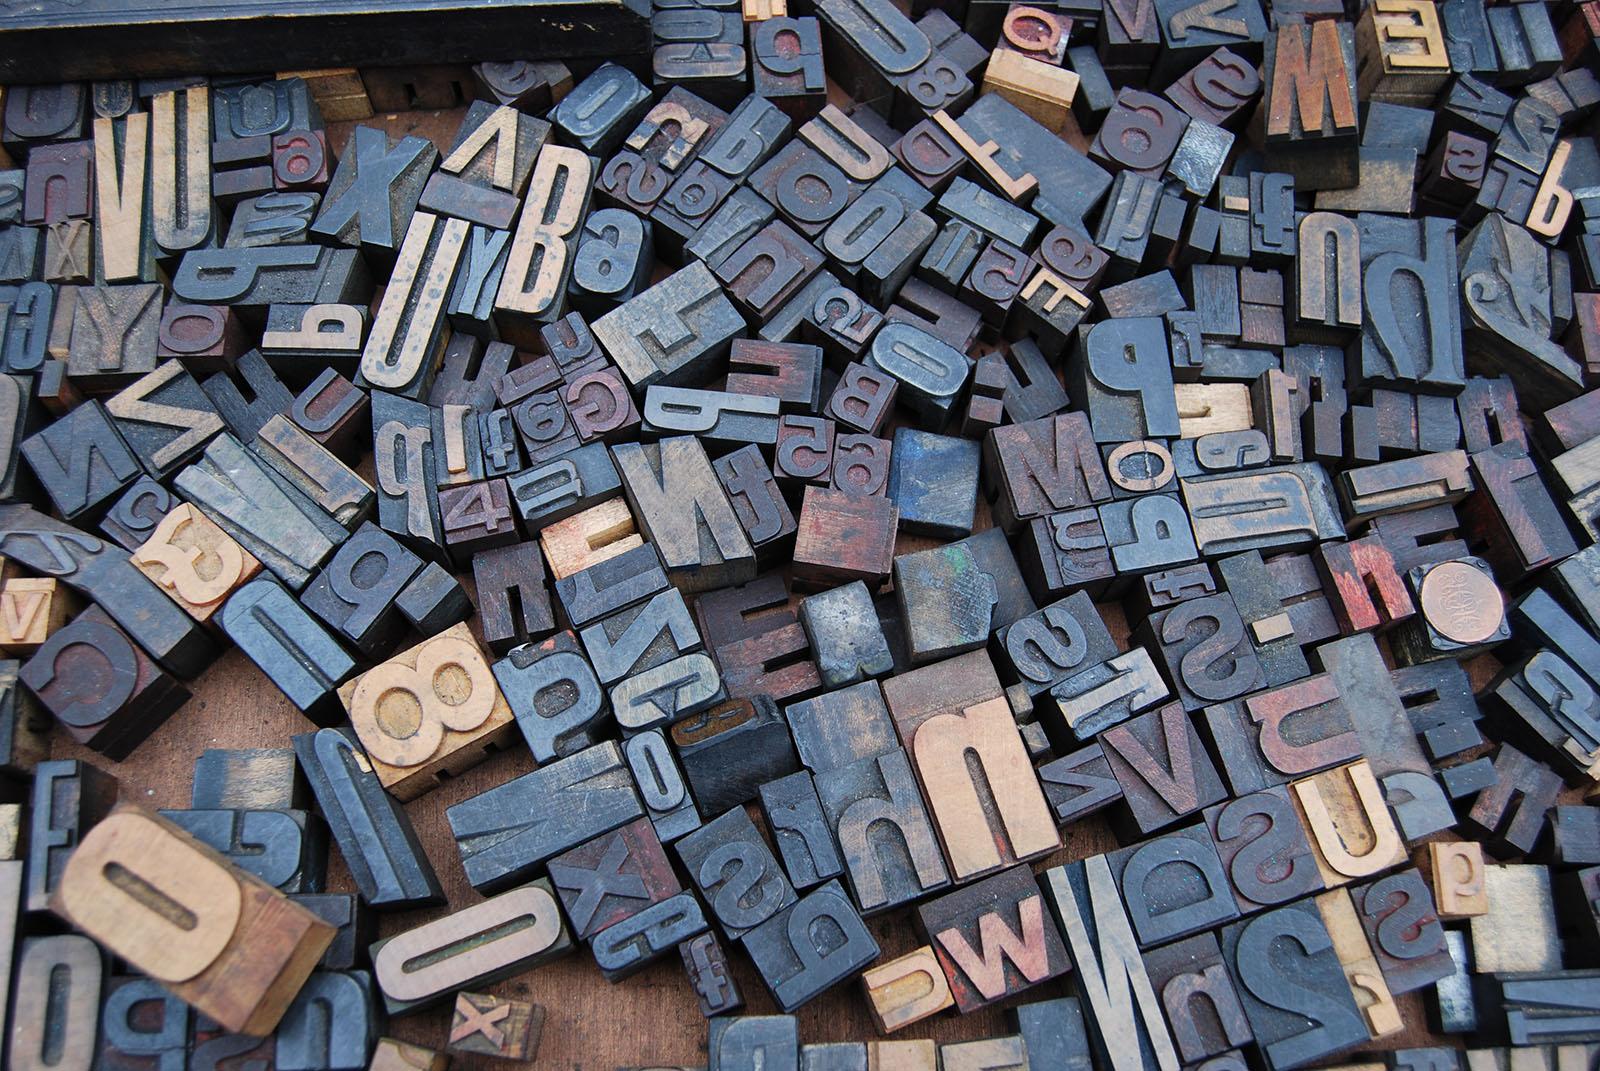 Pile of printing press letters - Image: https://unsplash.com/@amadorloureiro